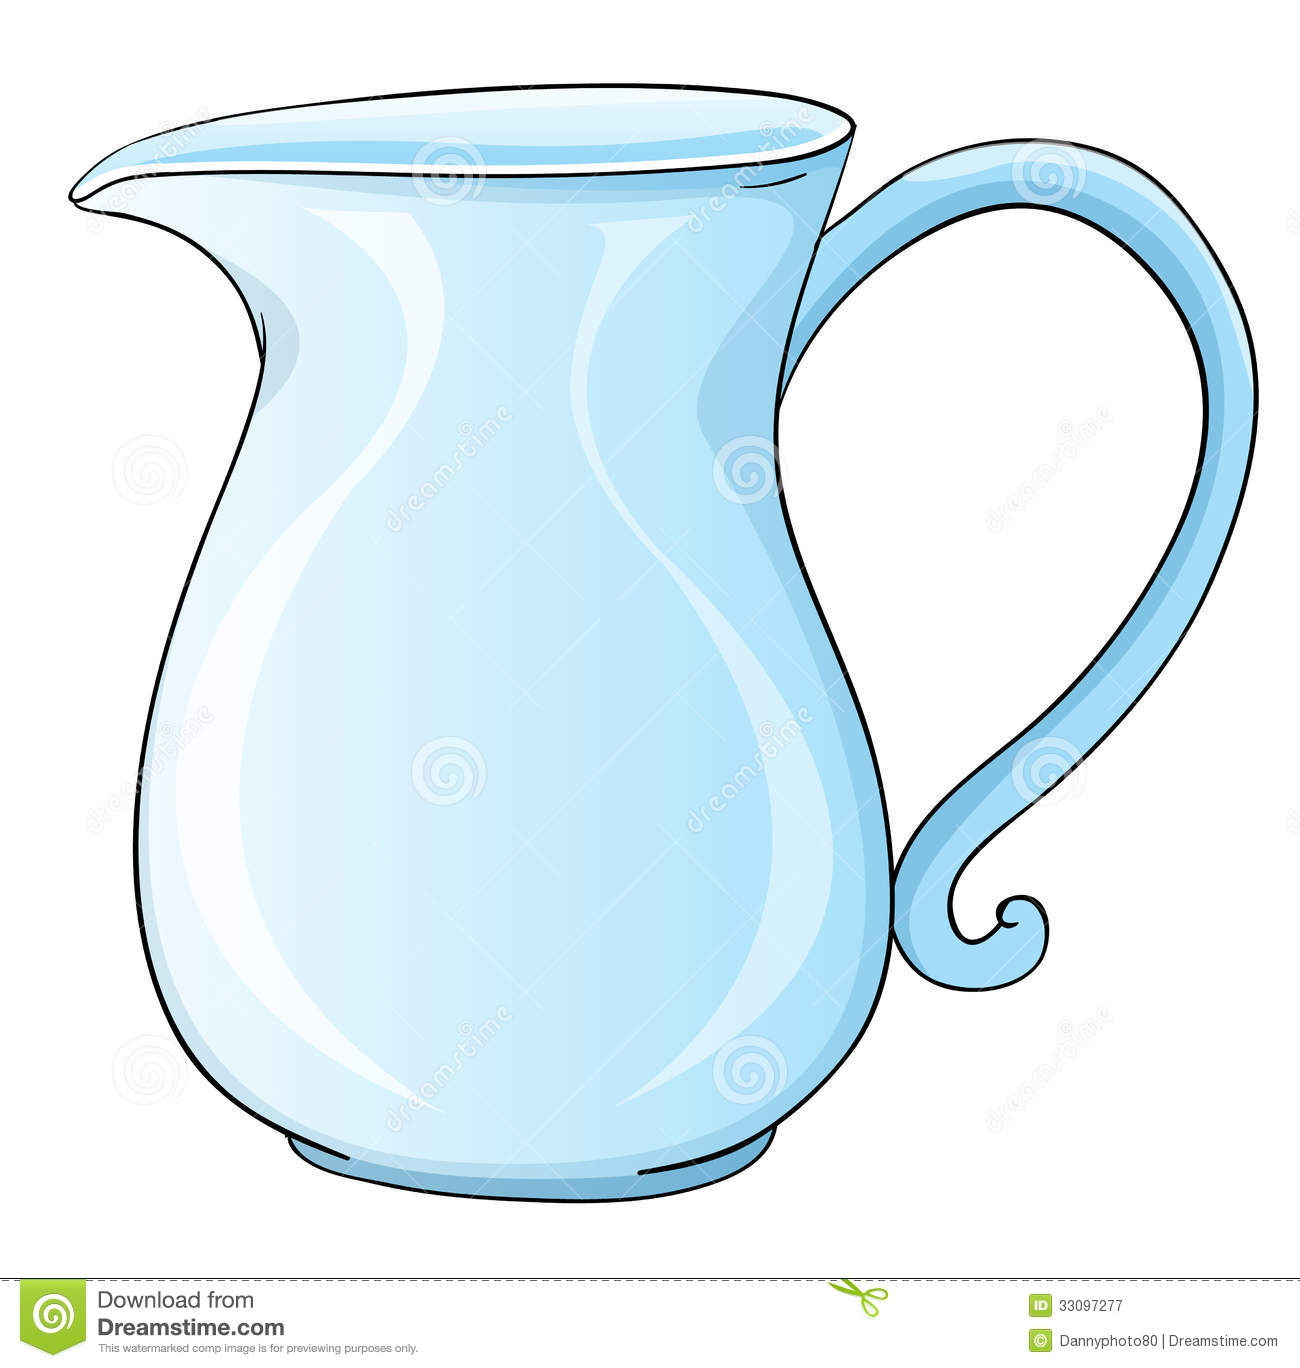 water jug: Illustration of a 